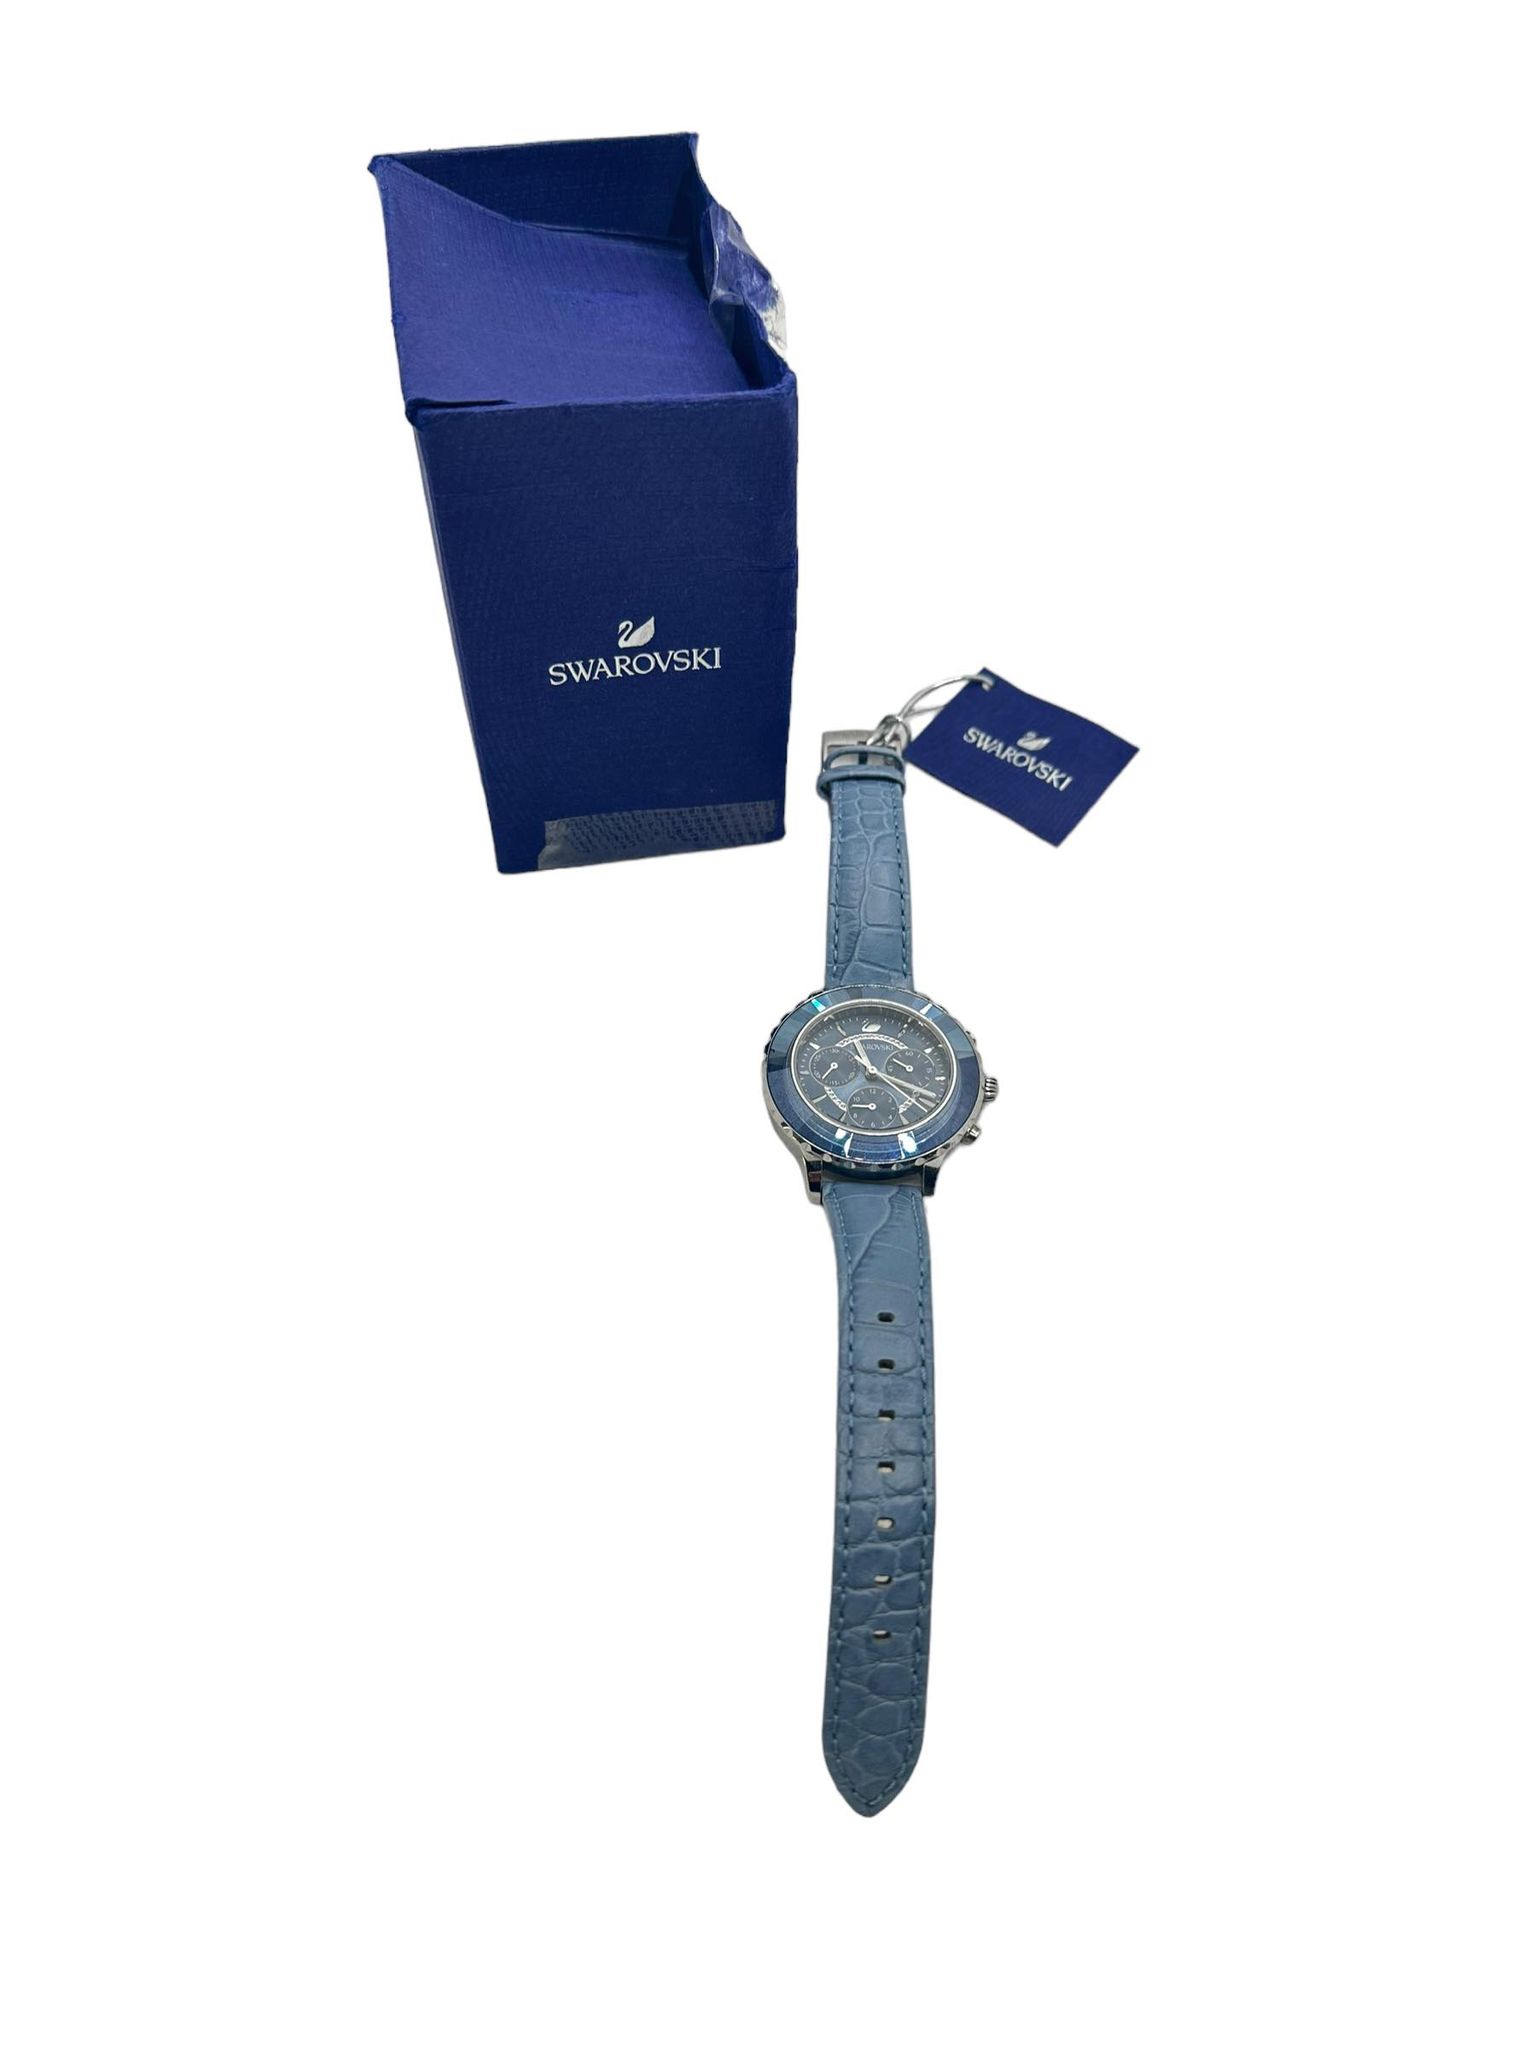 Swarovski Blue Octea Lux Chrono Watch Boxed